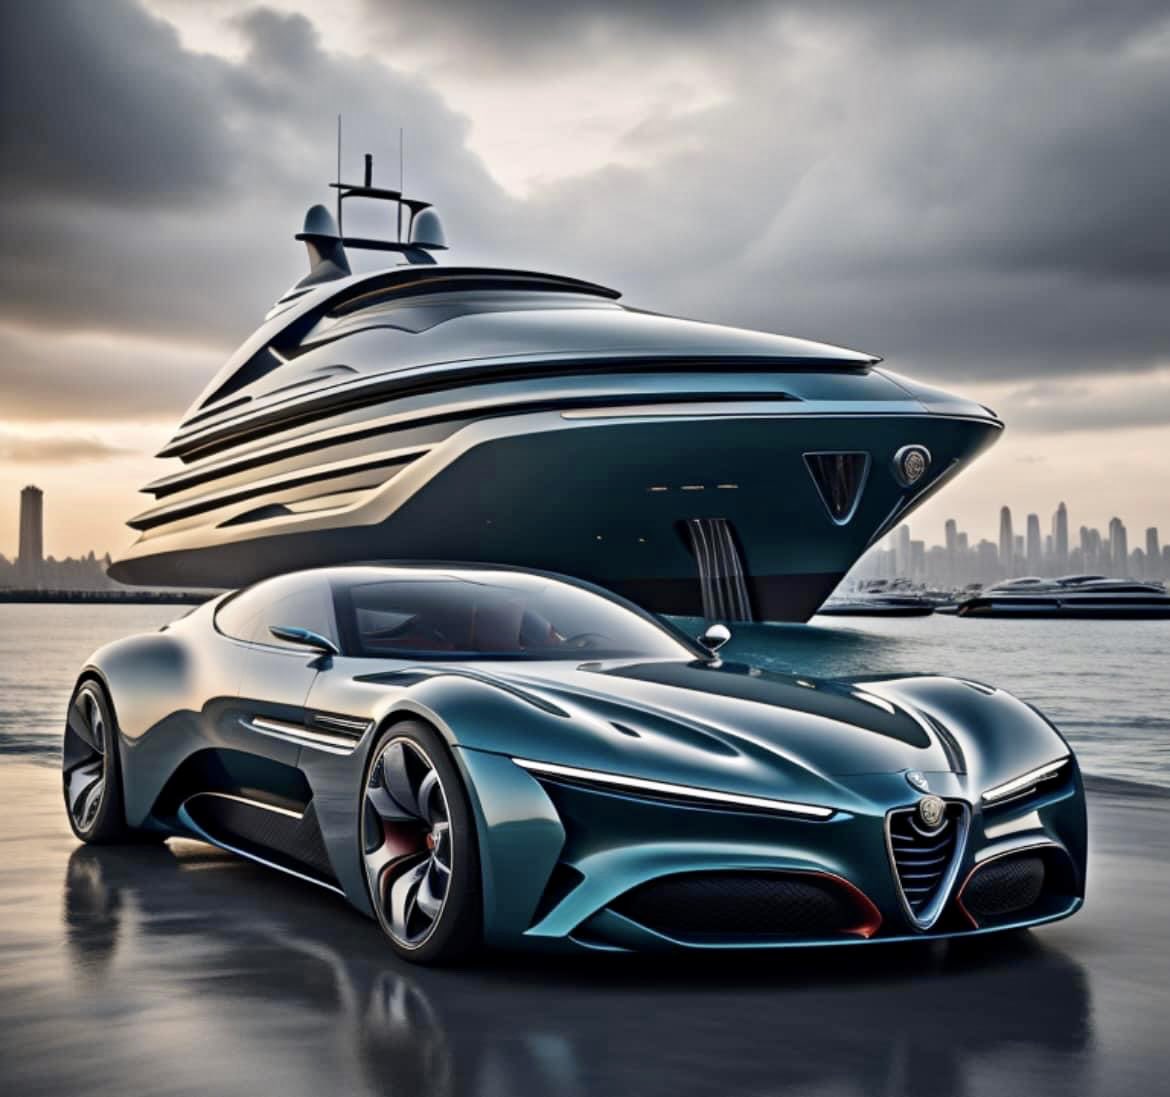 Ultimate Luxury and Style by Alfa Romeo 
#Alfa #AlfaRomeo #luxury #luxurycars #yachts #luxuryyachts #luxurylifestyle #Italian #Design